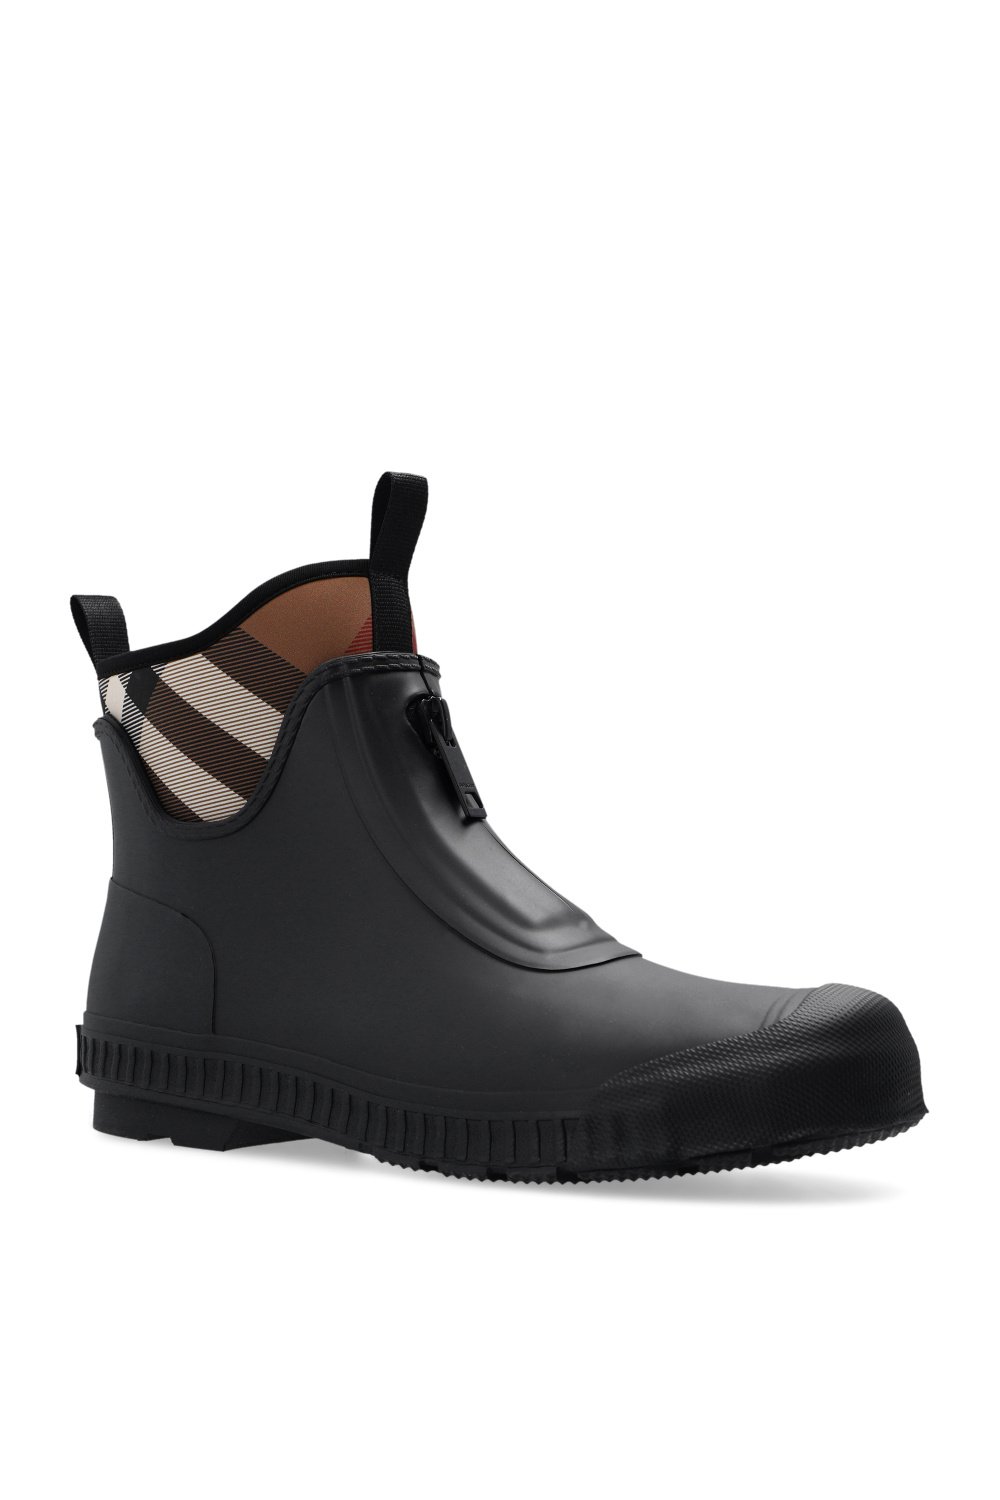 Checked rain boots style Burberry - Клатч style burberry оригинал -  IetpShops Slovenia